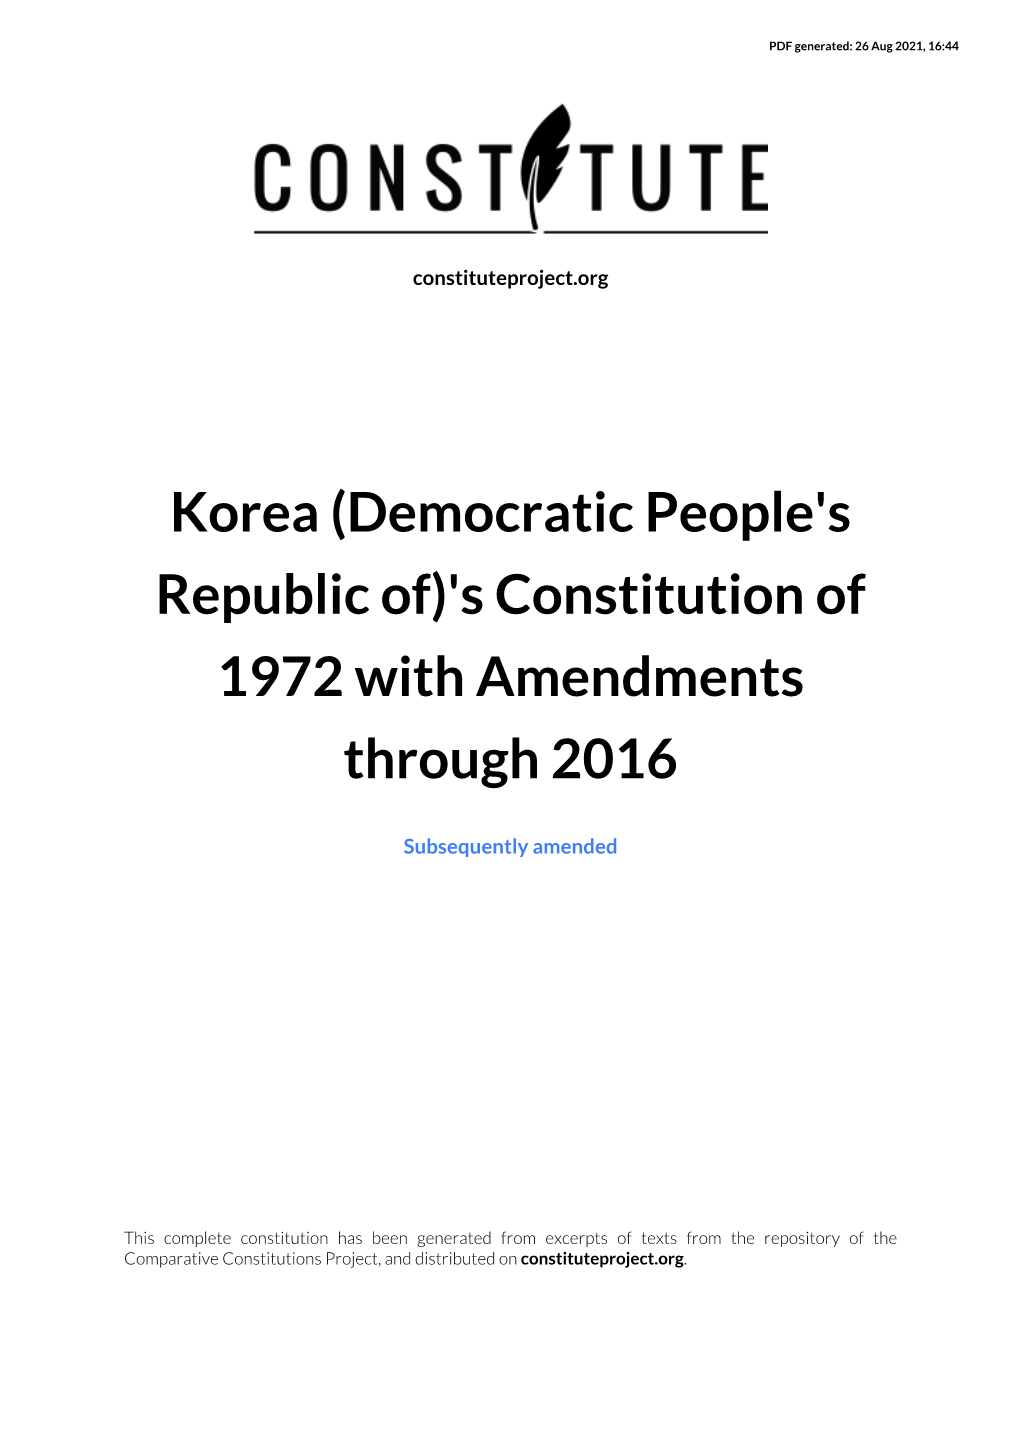 Korea (Democratic People's Republic Of)'S Constitution of 1972 with Amendments Through 2016